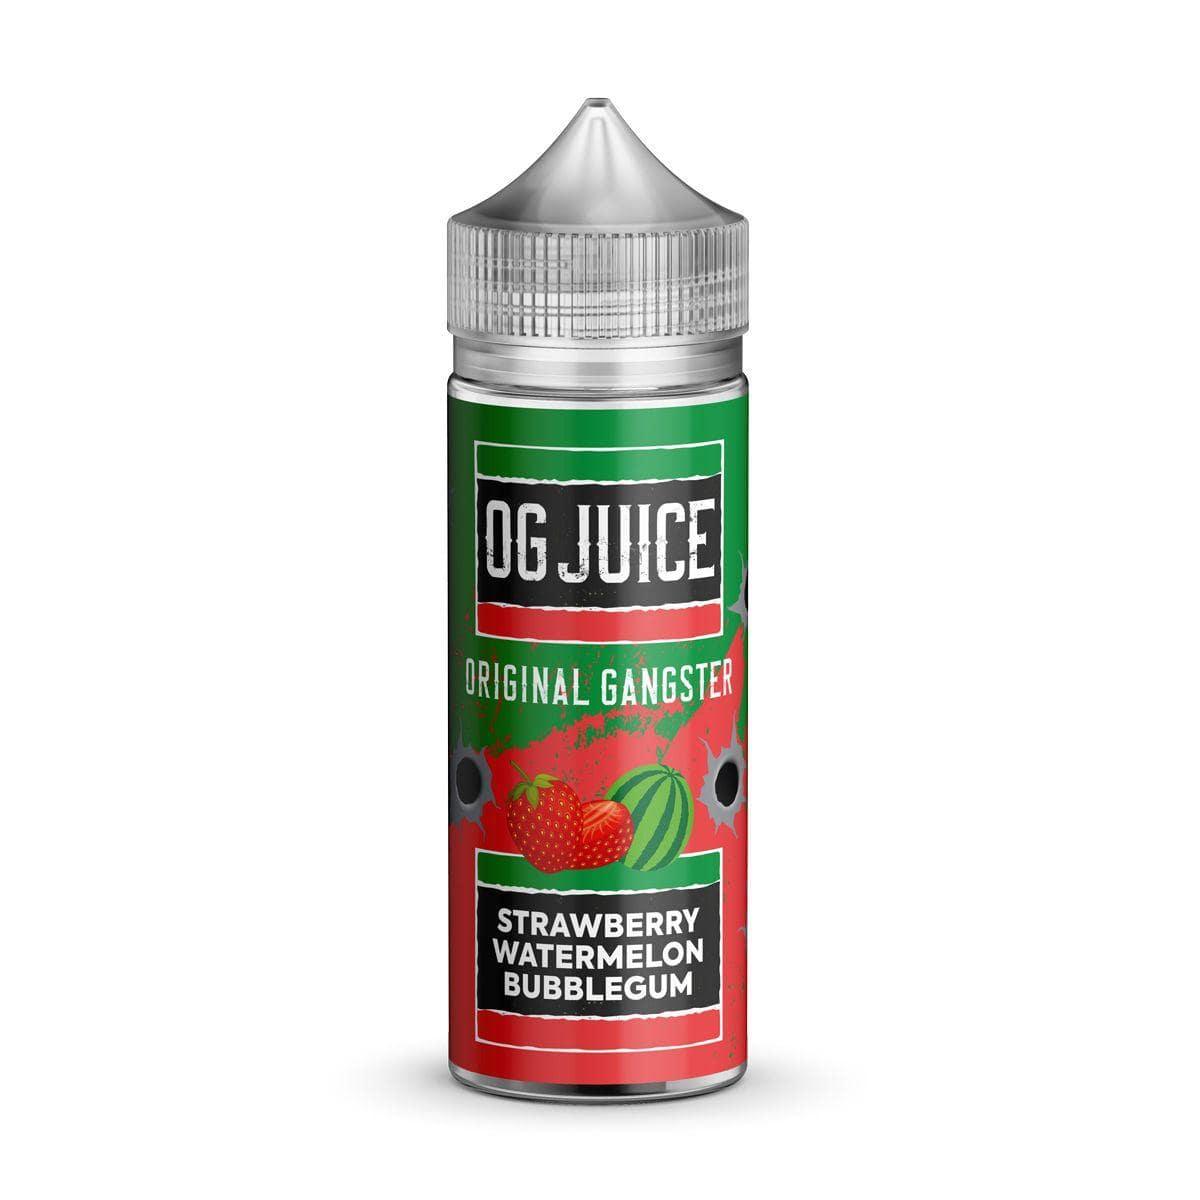 OG Juice Original Gangster 100ml E-liquid Shortfill - Puff N Stuff